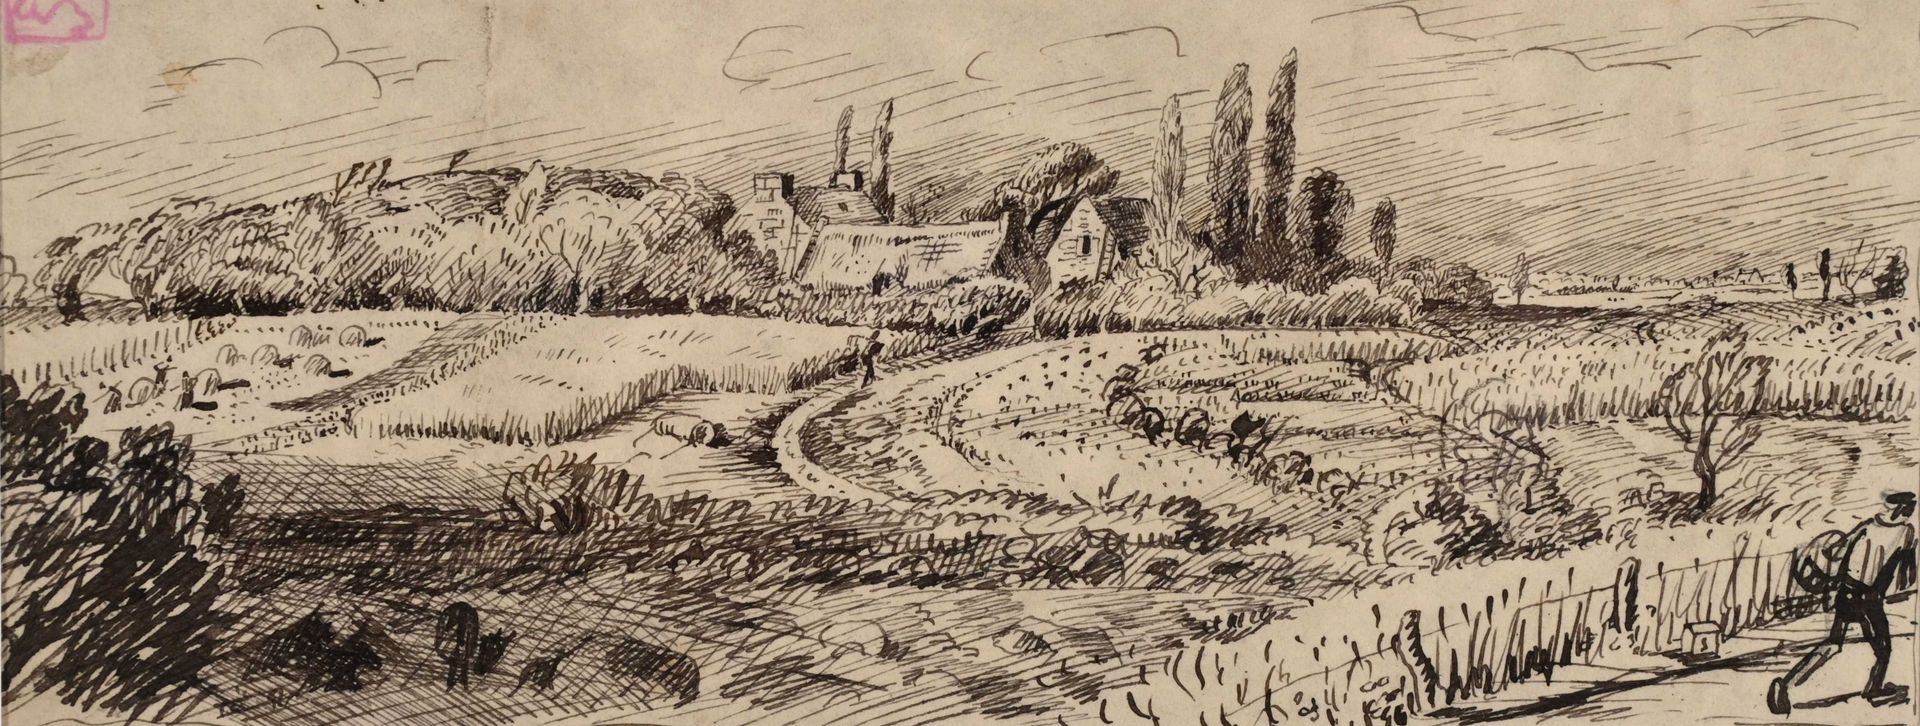 Null Adolphe BEAUFRERE (1876-1960) "Granja bretona" tinta cahg 8,5x22